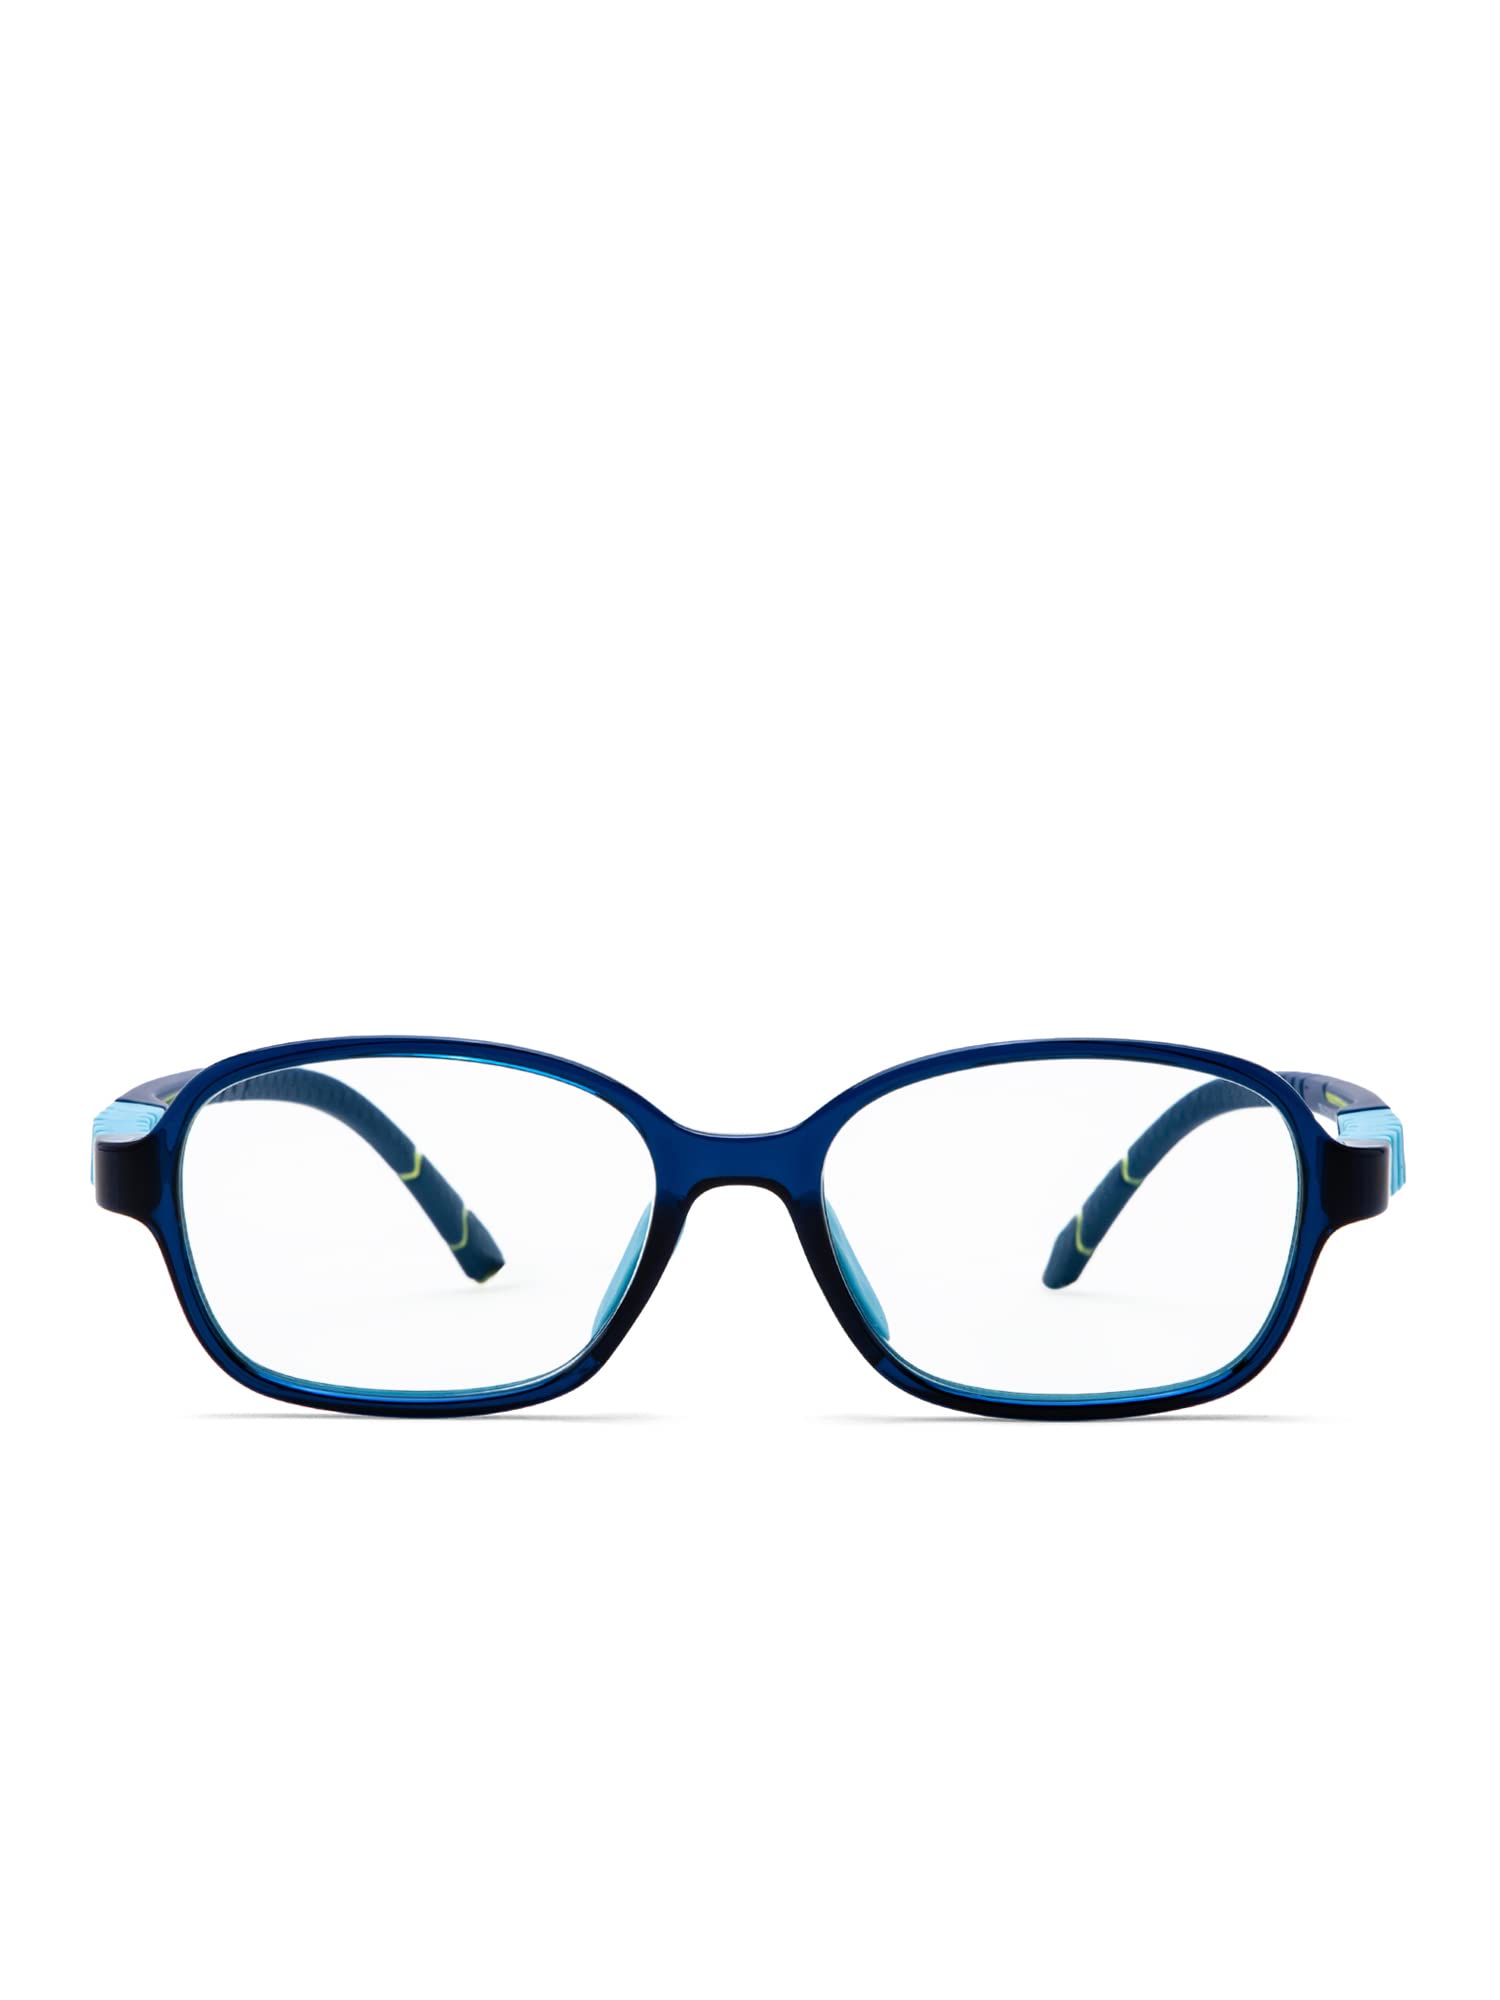 Intellilens Squarish Oval Kids Computer Glasses for Eye Protection | Zero Power, Anti Glare & Blue Light Filter Glasses | Blue Cut Lenses for Boys and Girls (Blue) (46-15-130)